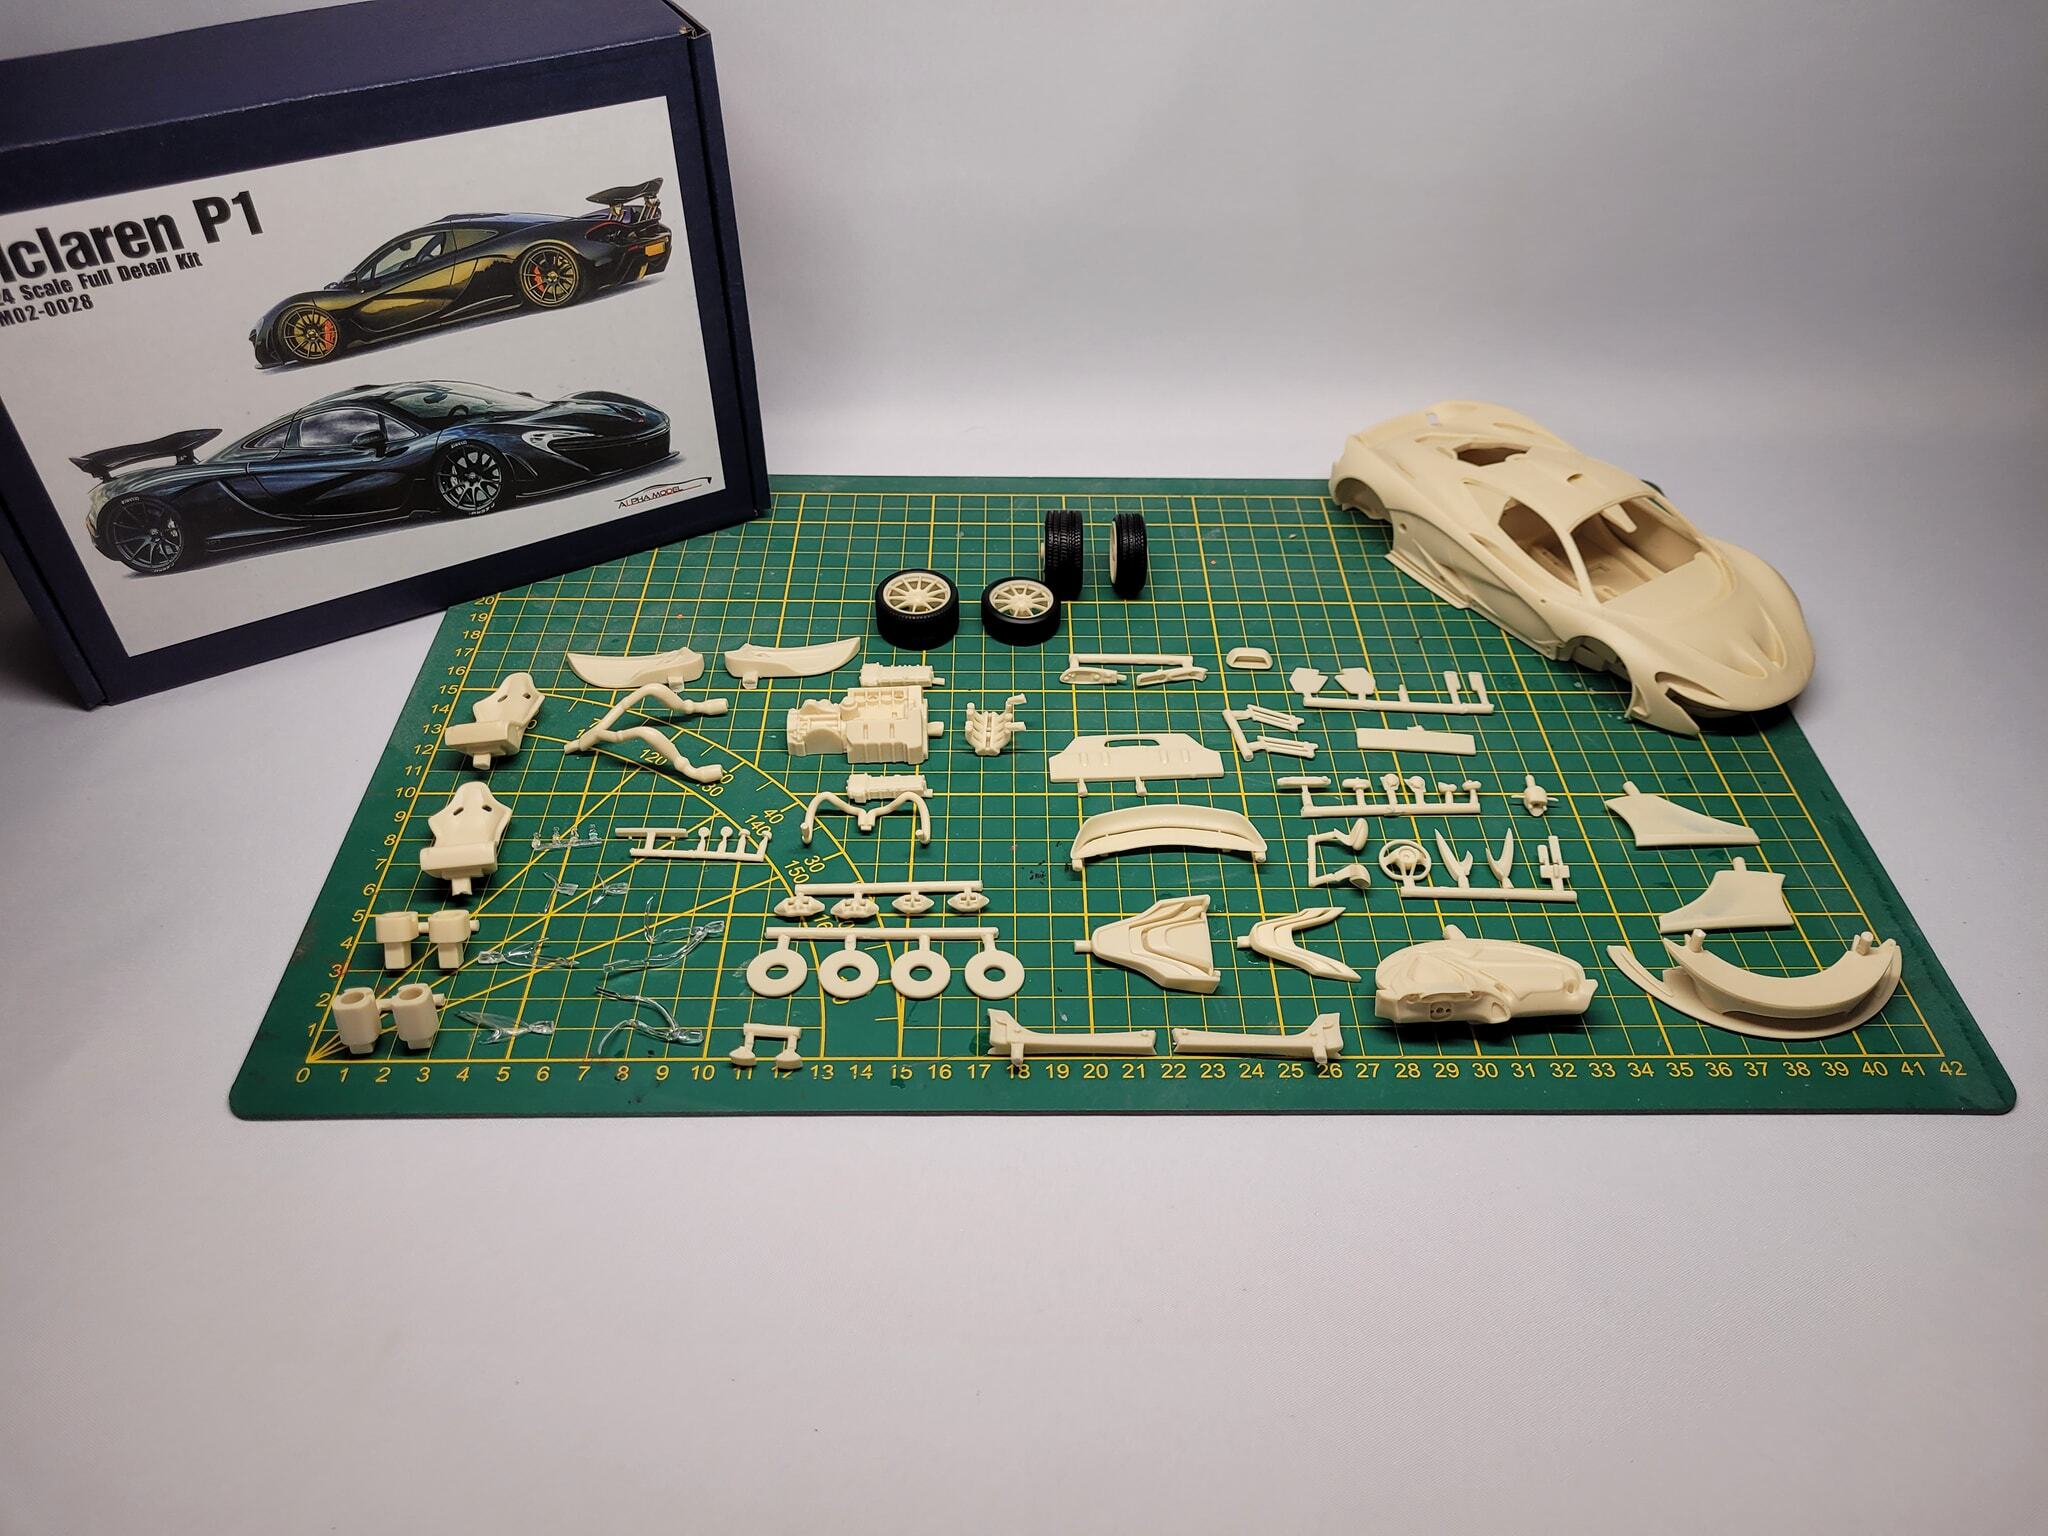  1/24 scale model car kits,1/24 model car kits,1/24 resin model car kits